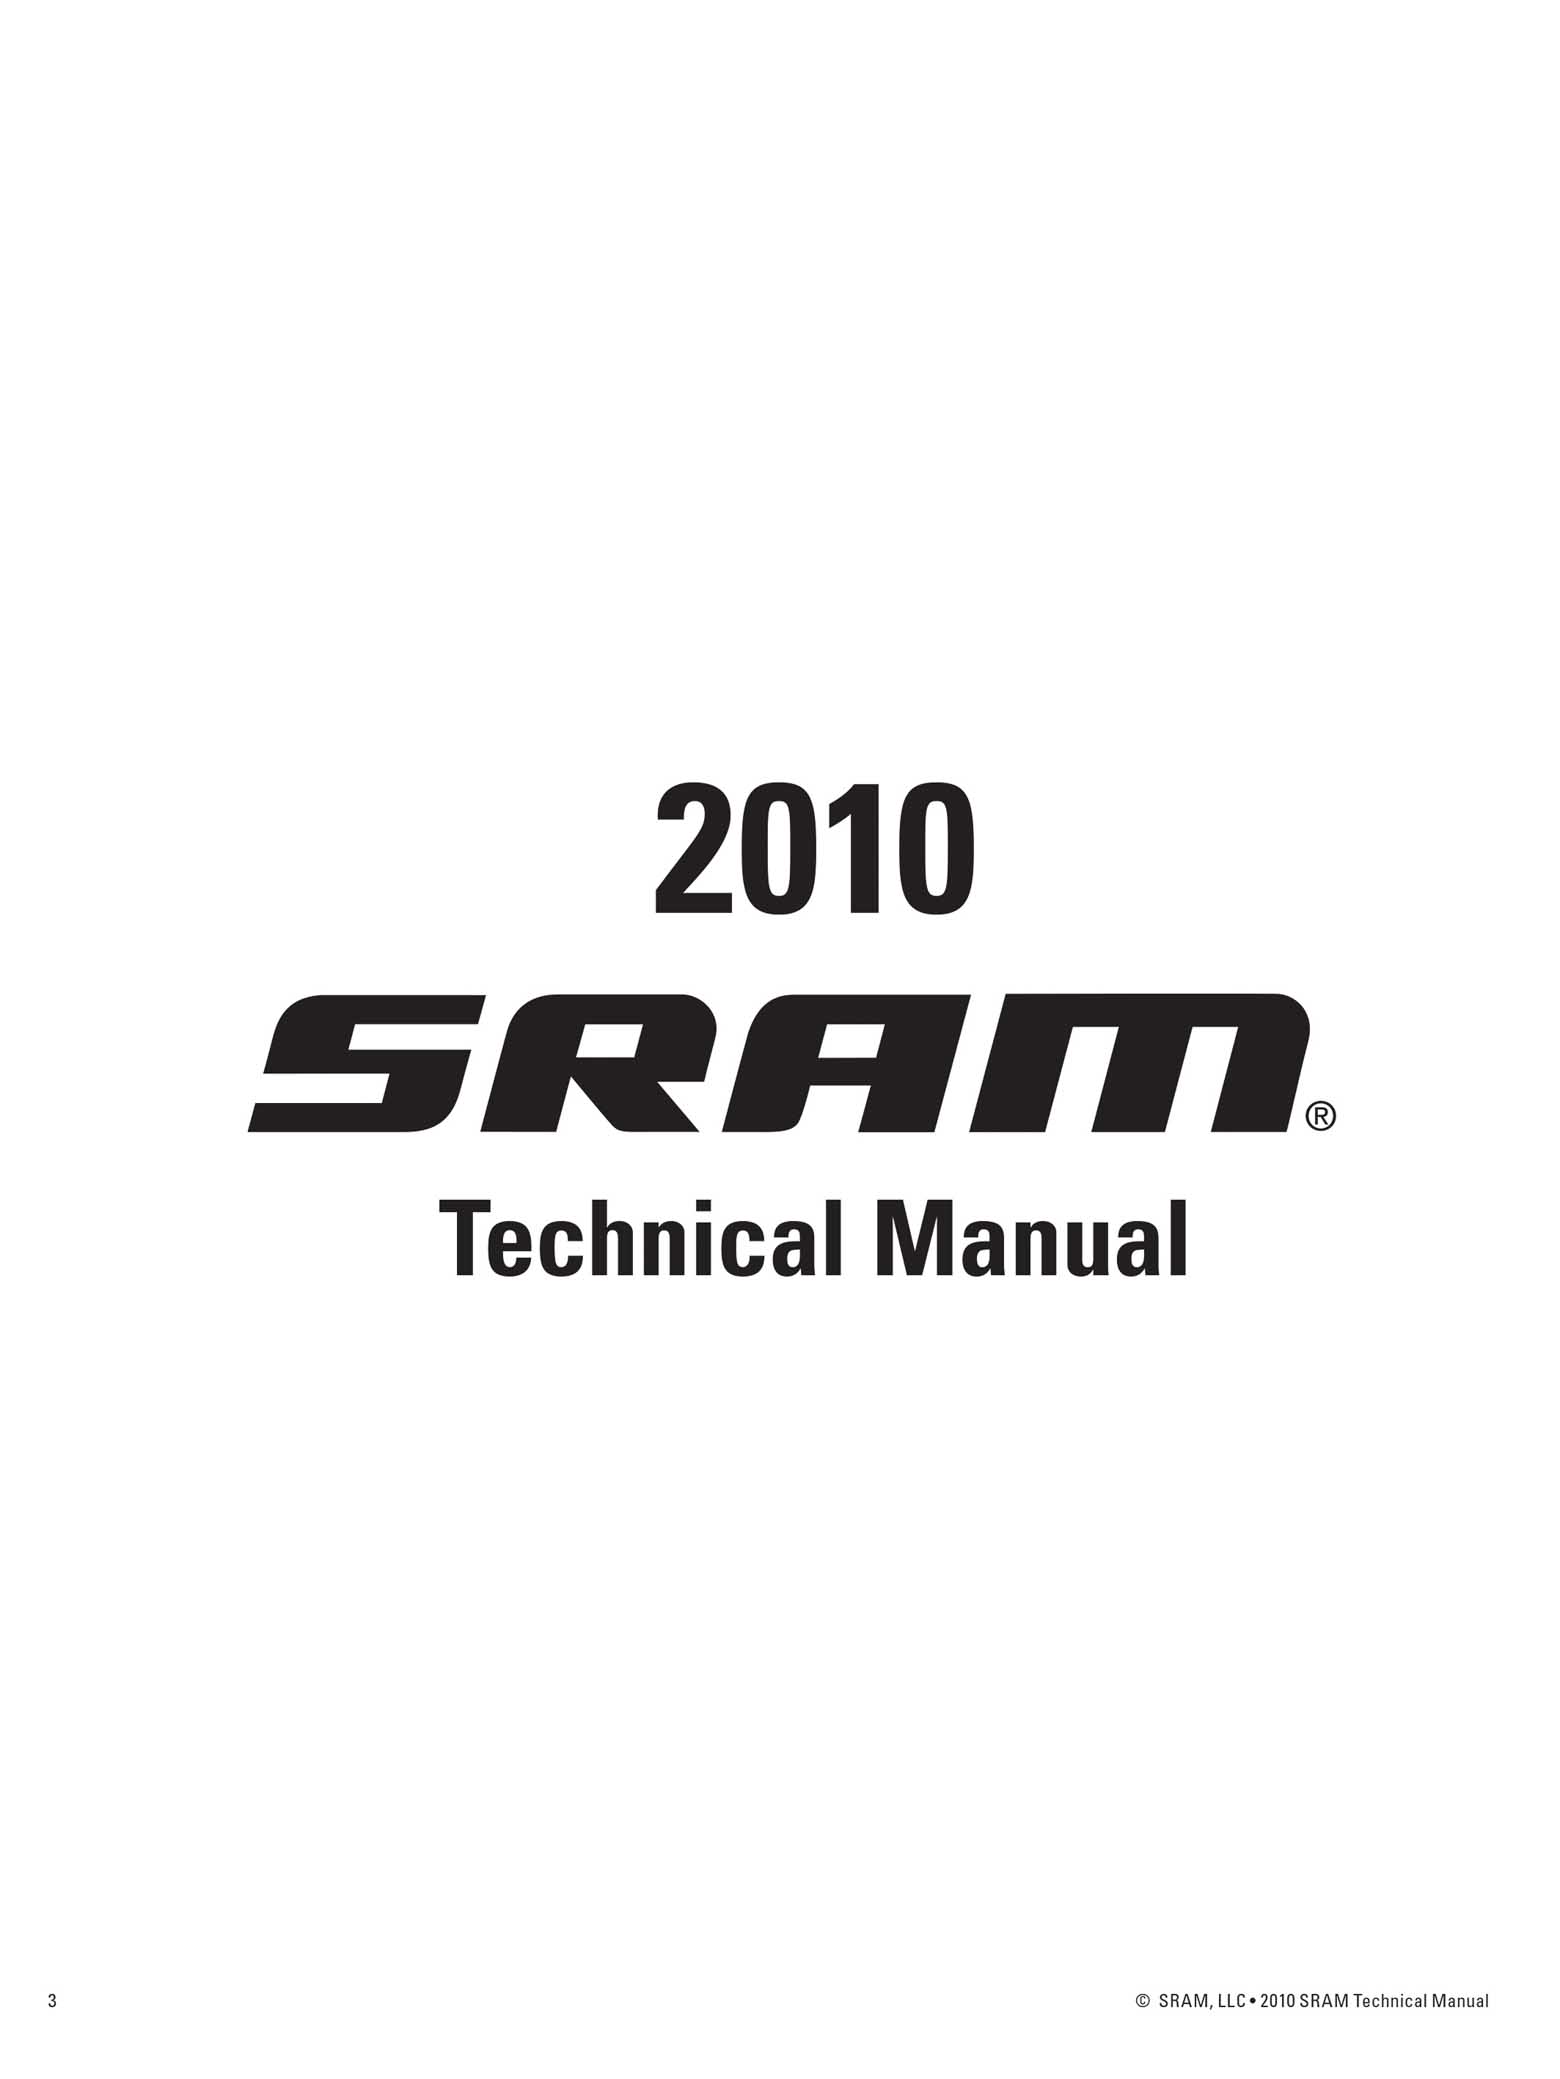 SRAM Technical Manual 2010 page 003 main image